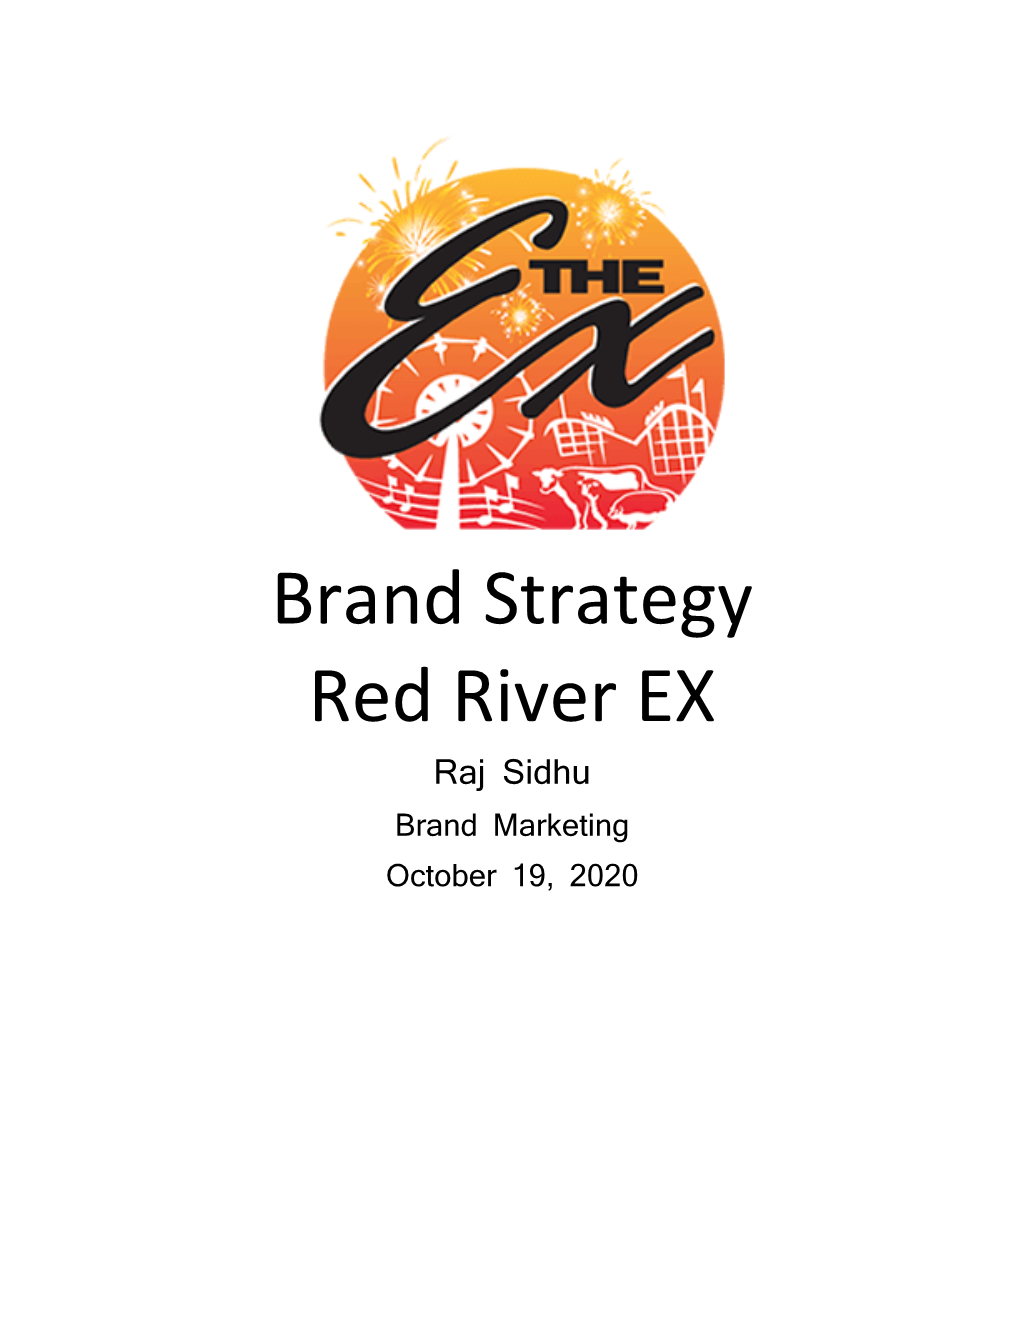 Brand Strategy Red River EX Raj Sidhu Brand Marketing October 19, 2020